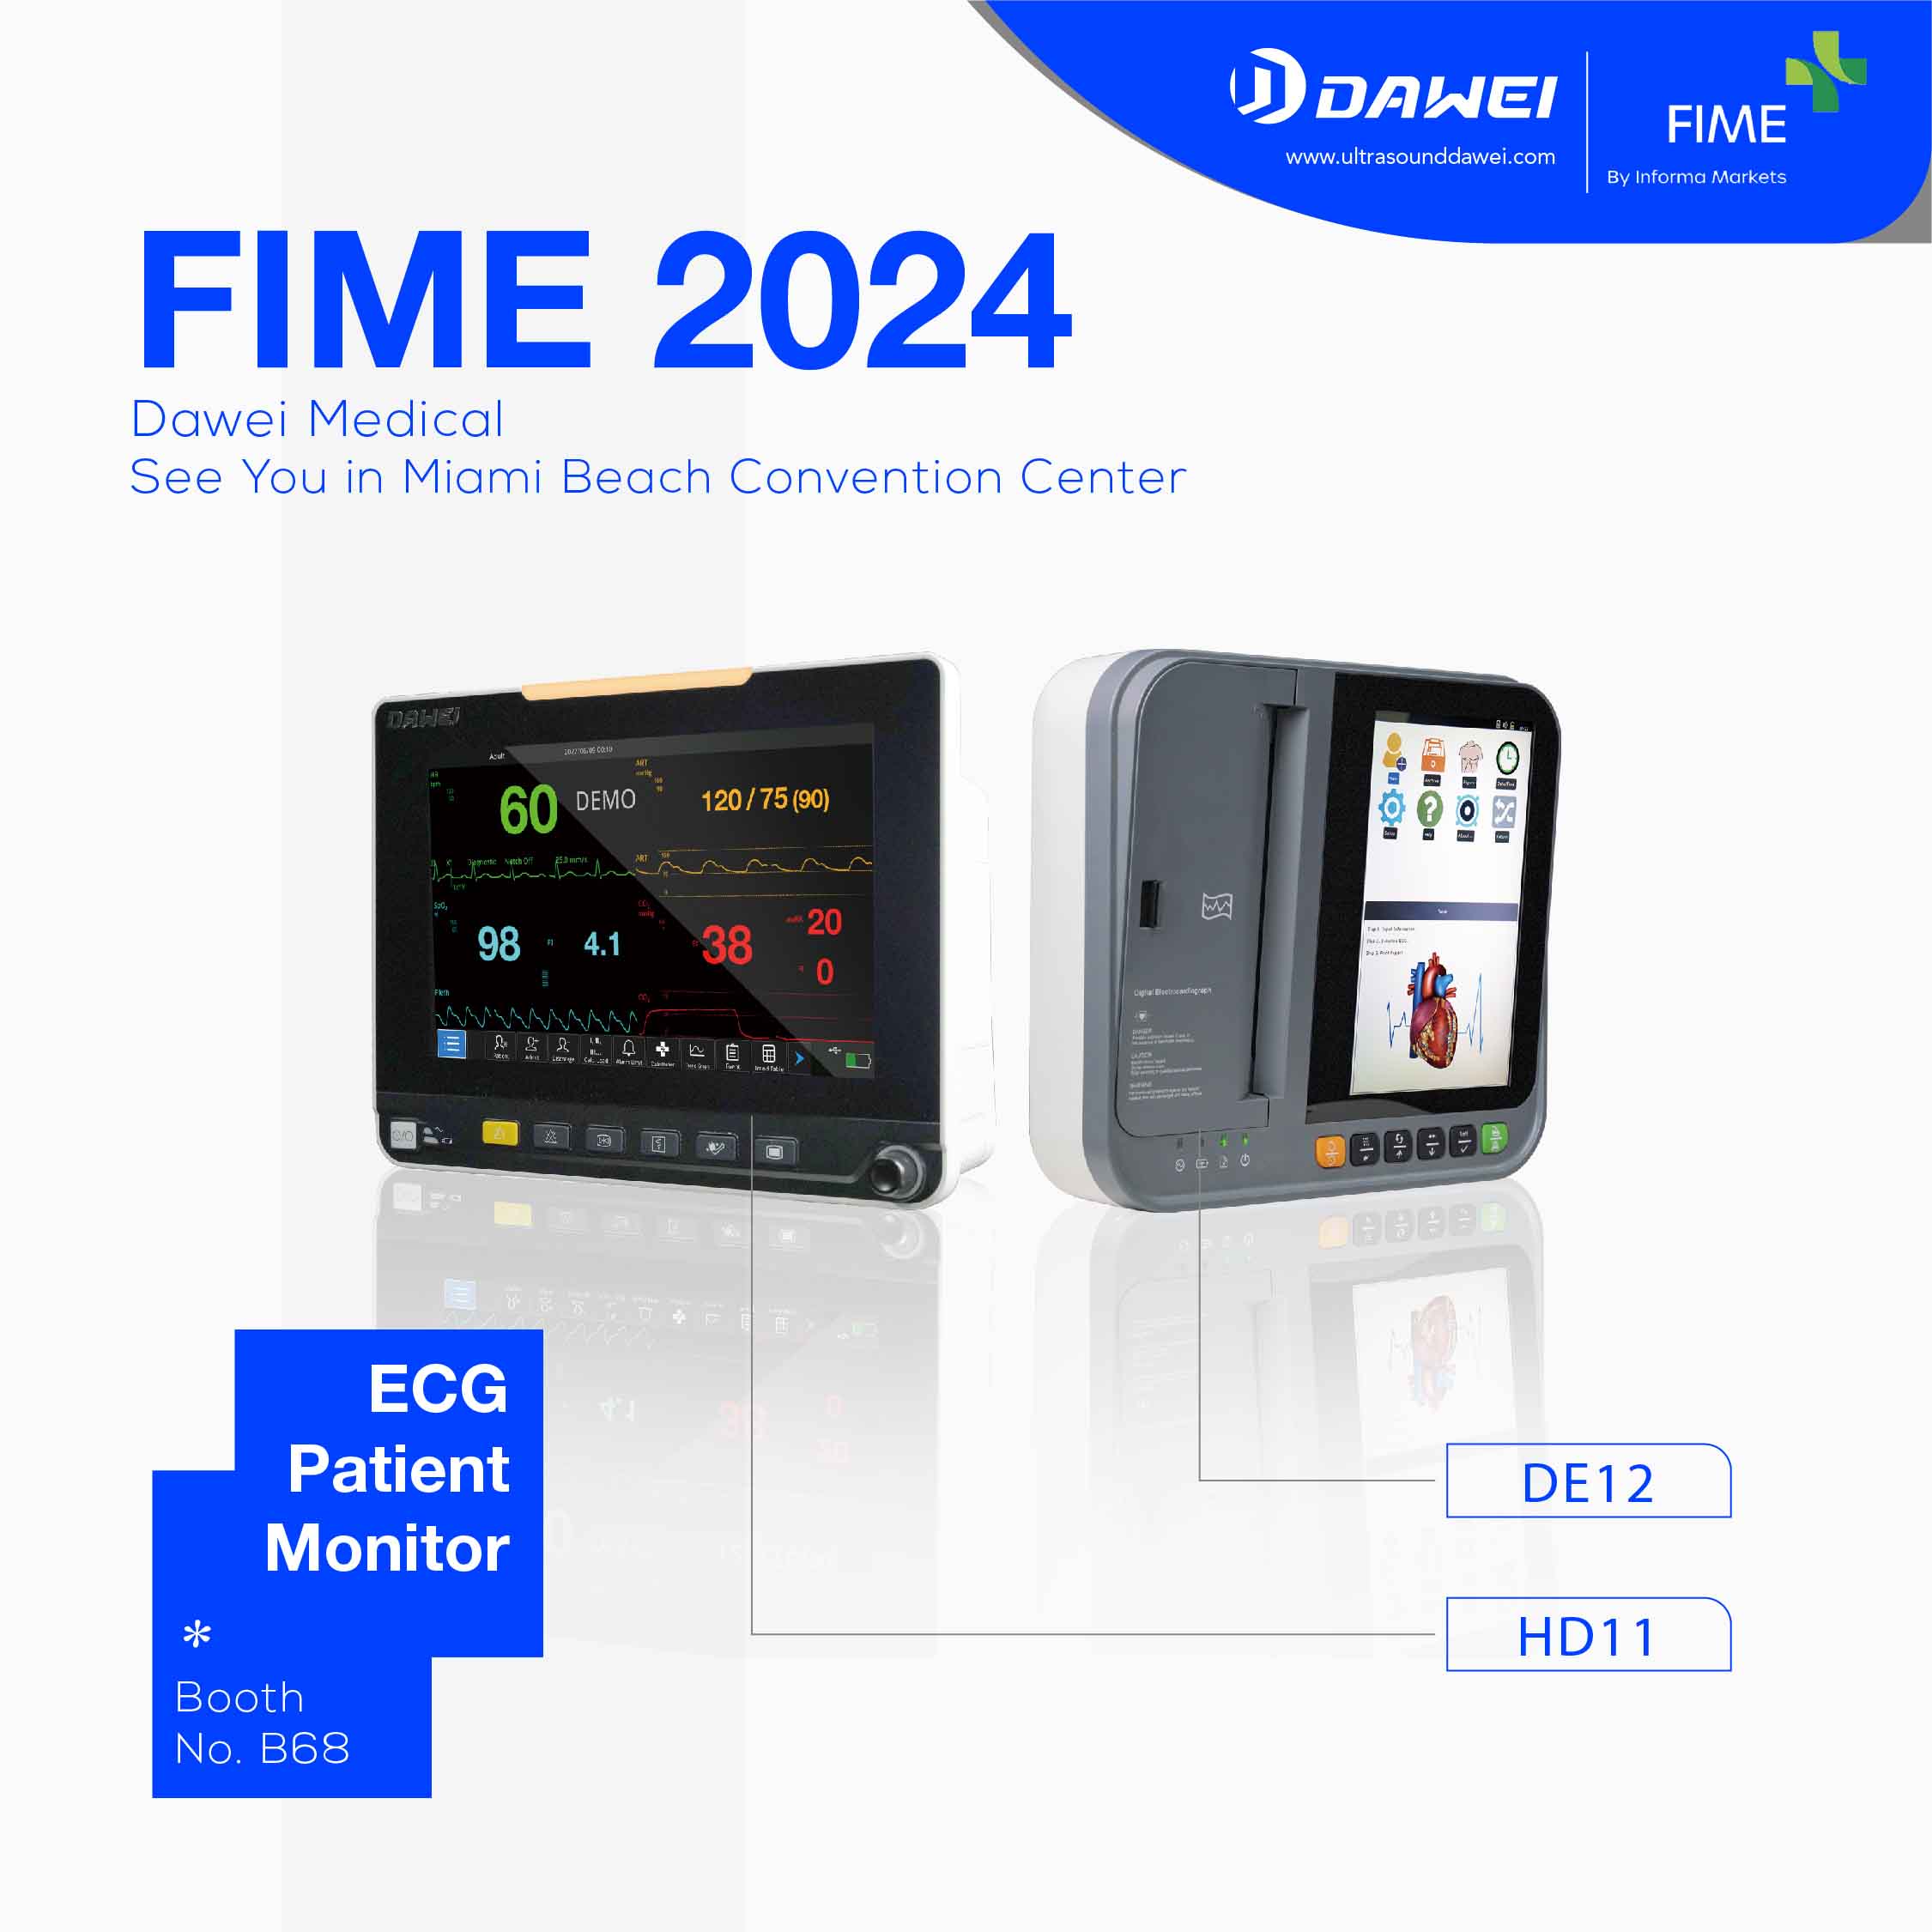 https://www.ultrasounddawei.com/news/dawei-medical-florida-international-medical-expo-fime-2024/